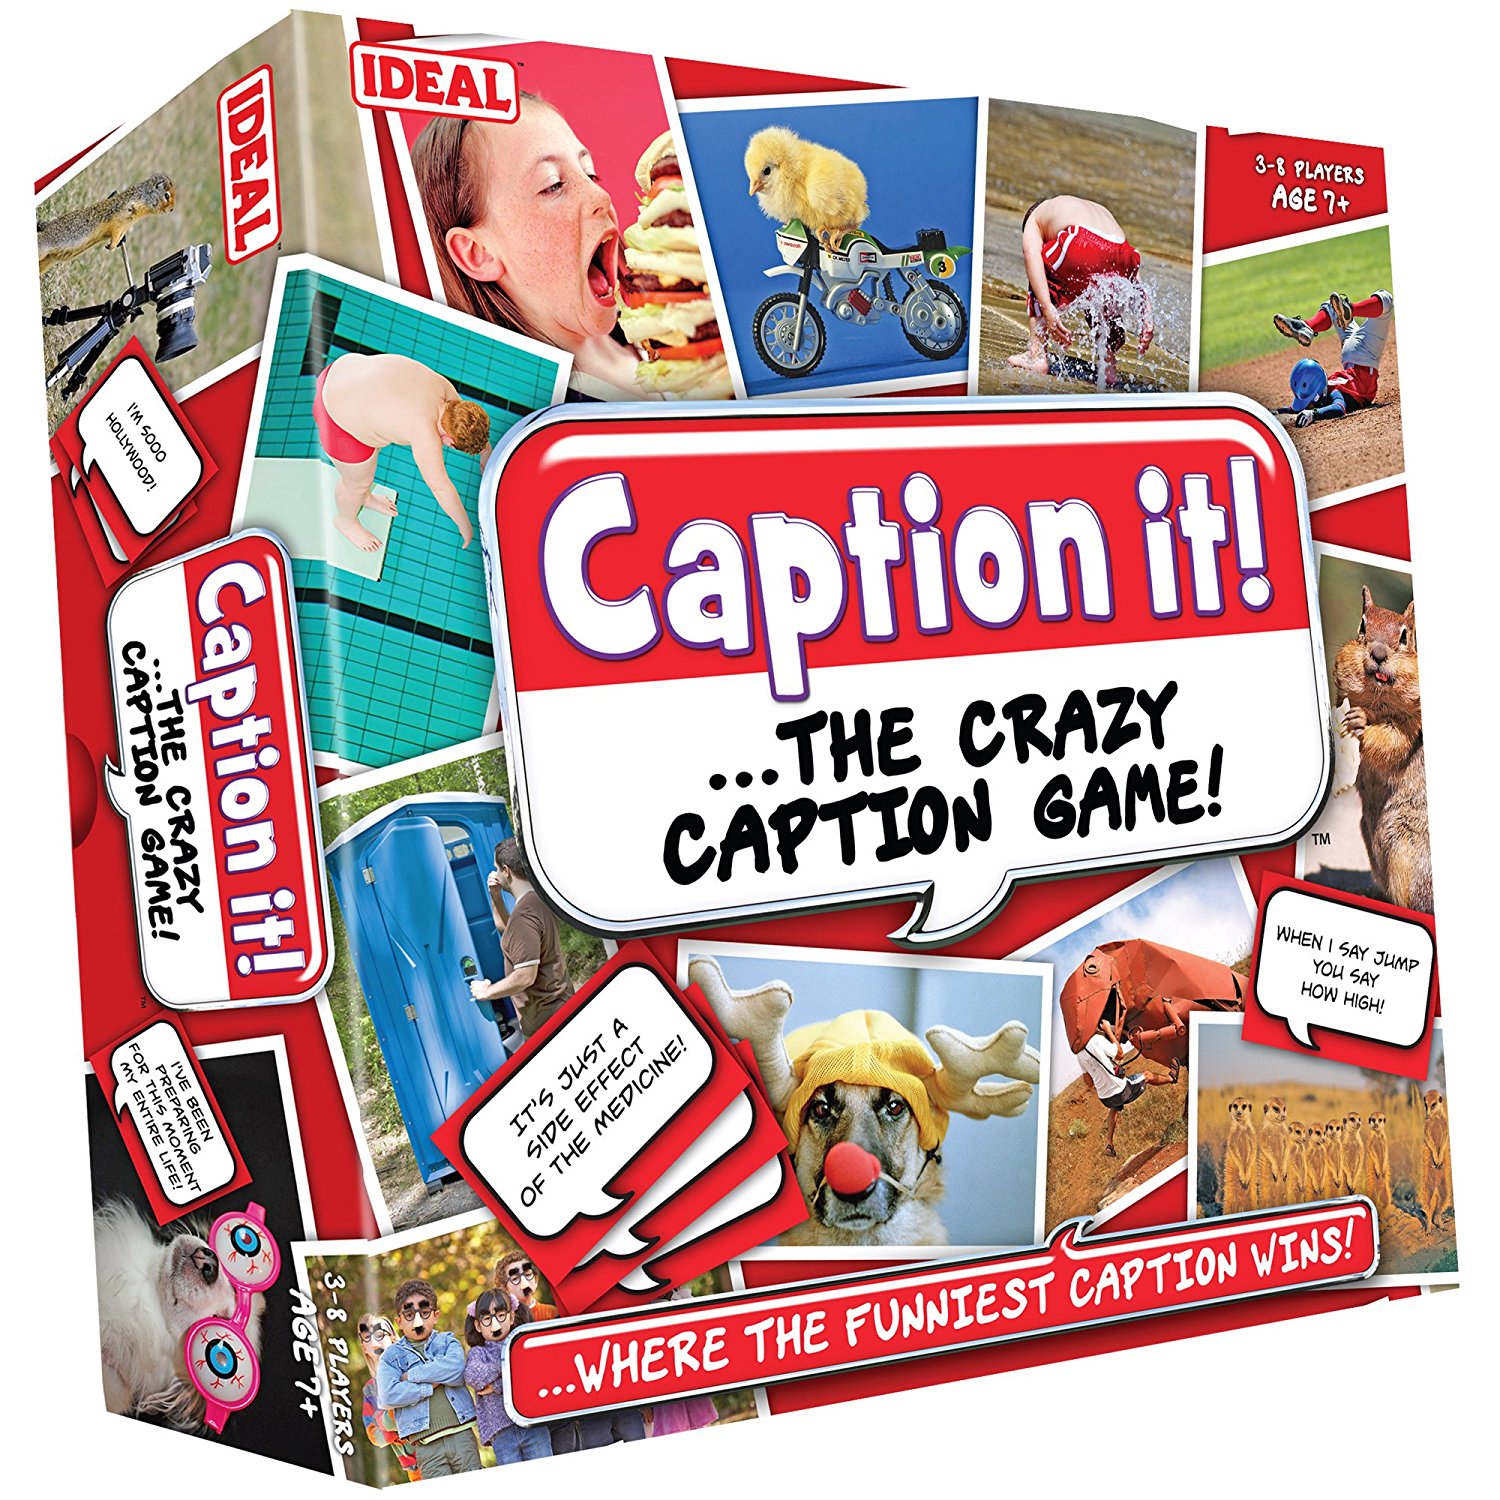 Caption It Card Game: Amazon.co.uk: Toys & Games